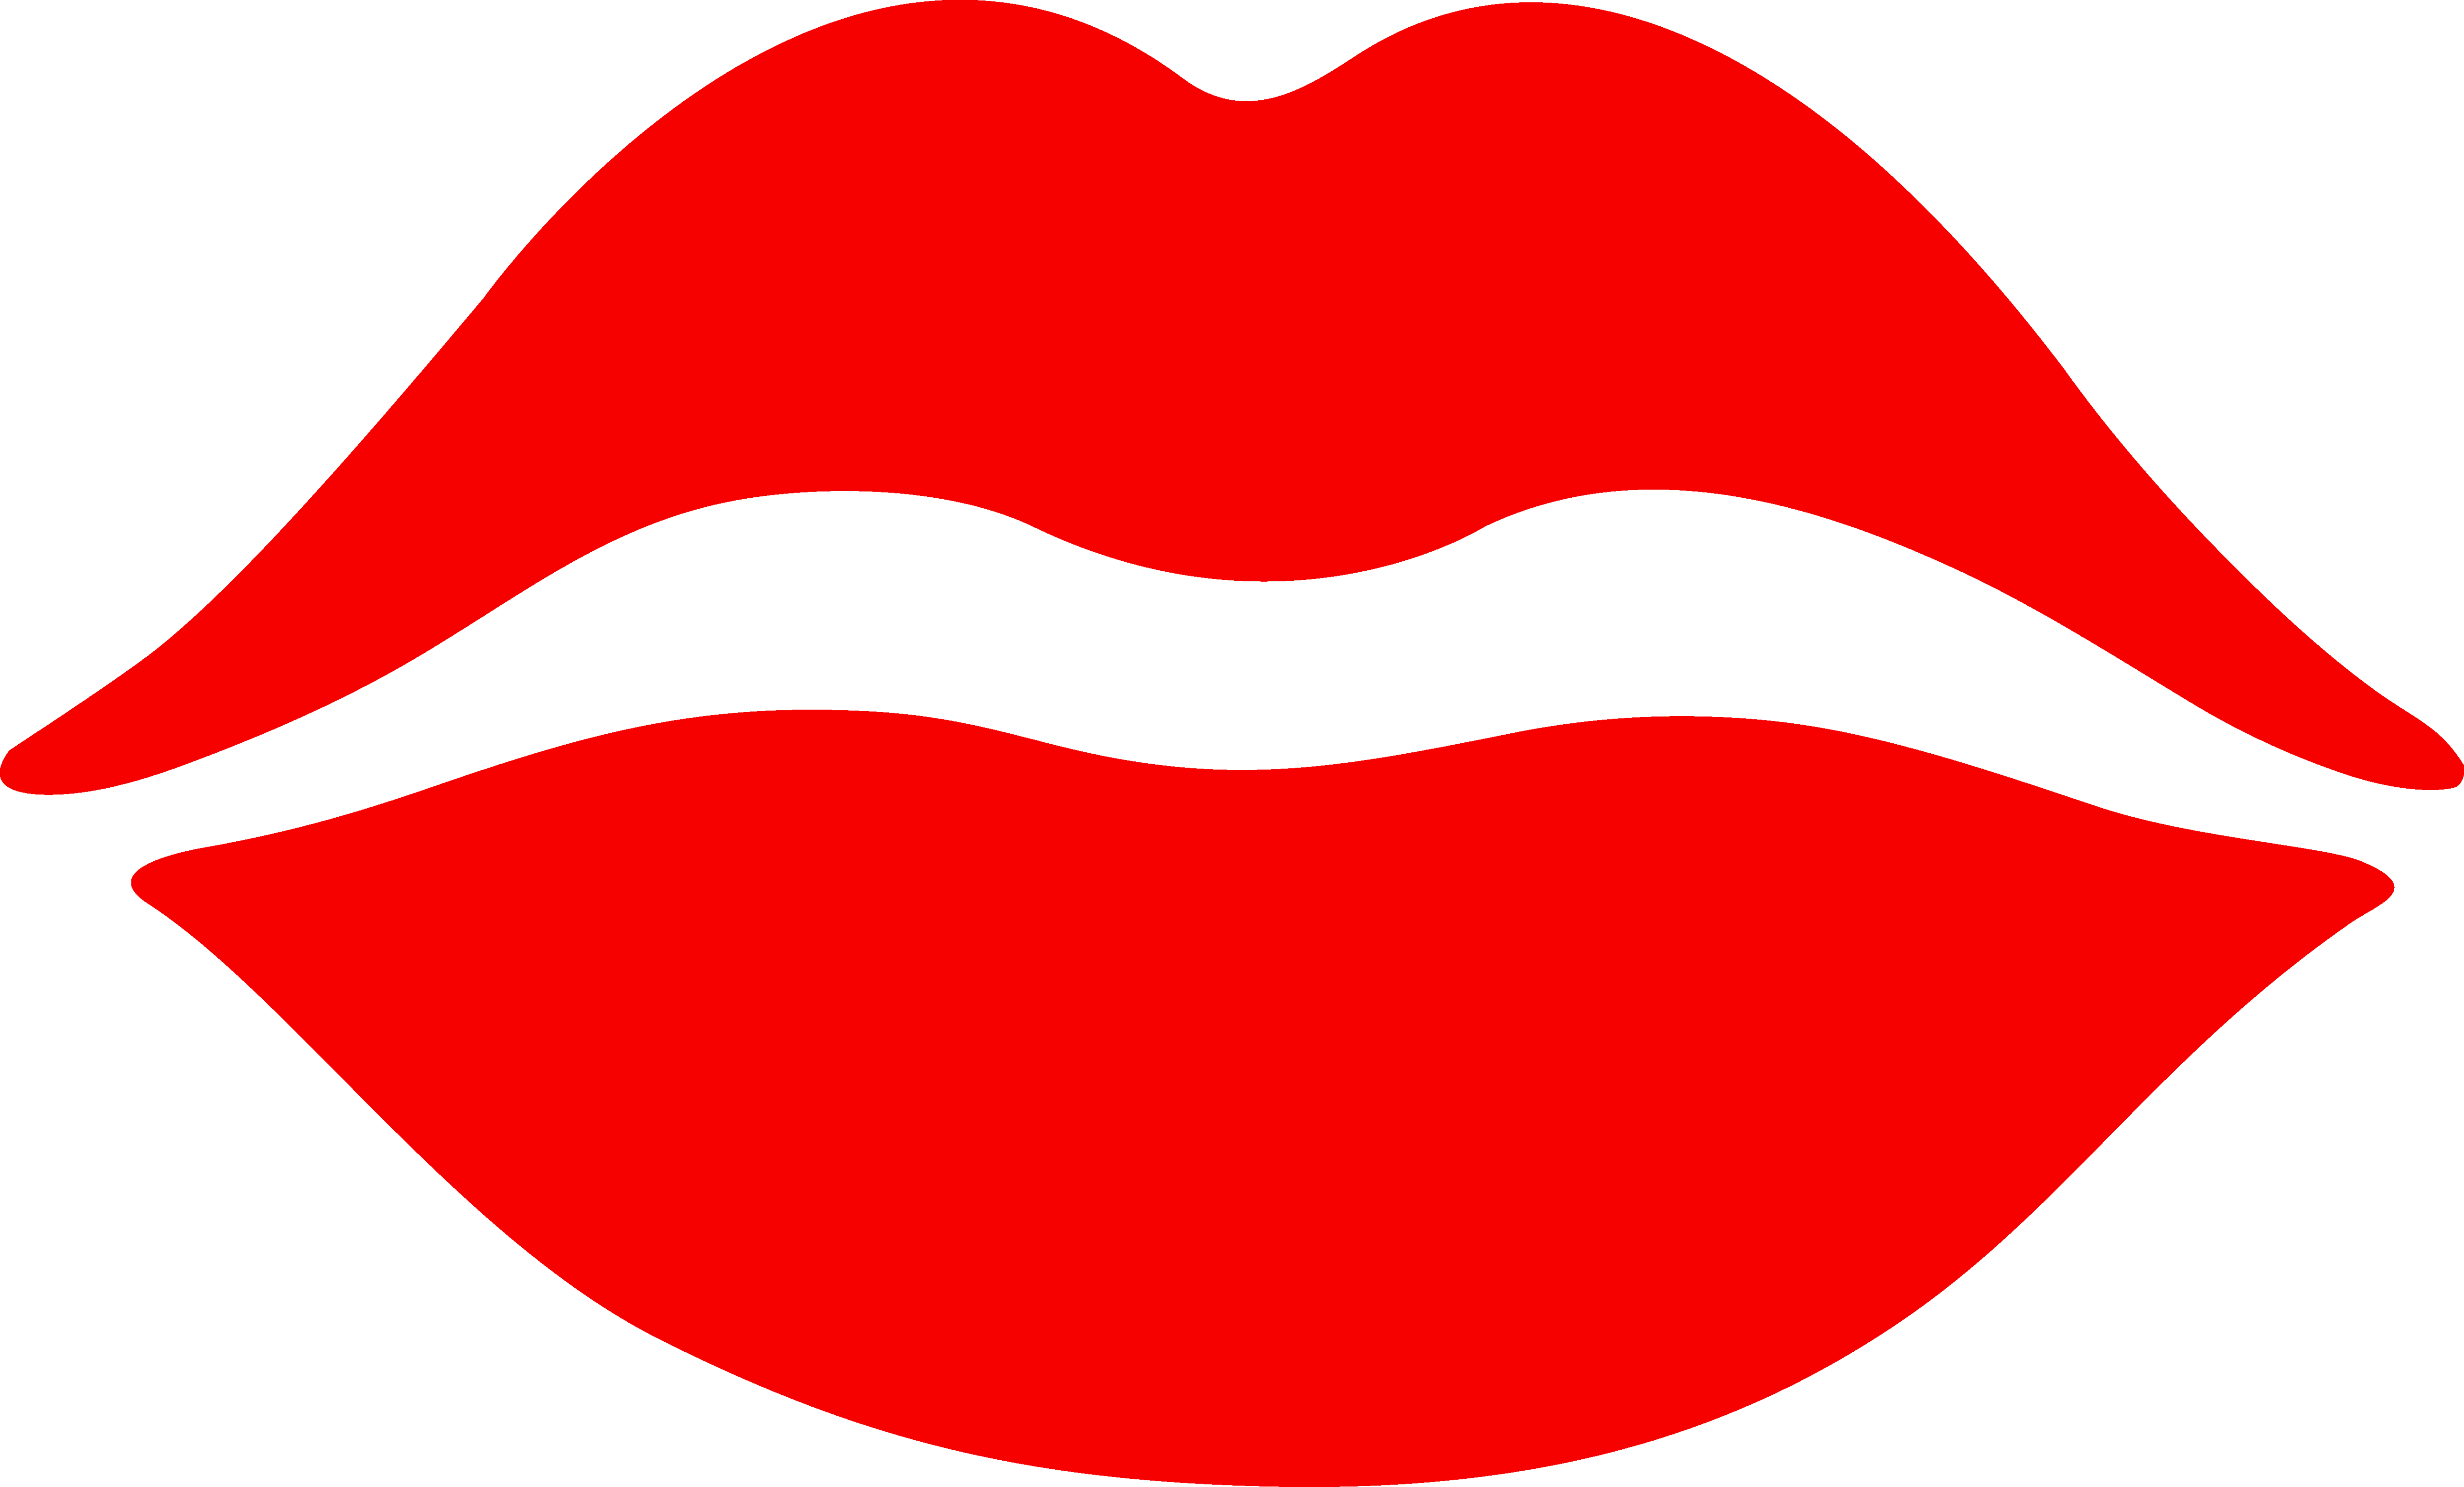 Clipart lips by netalloy